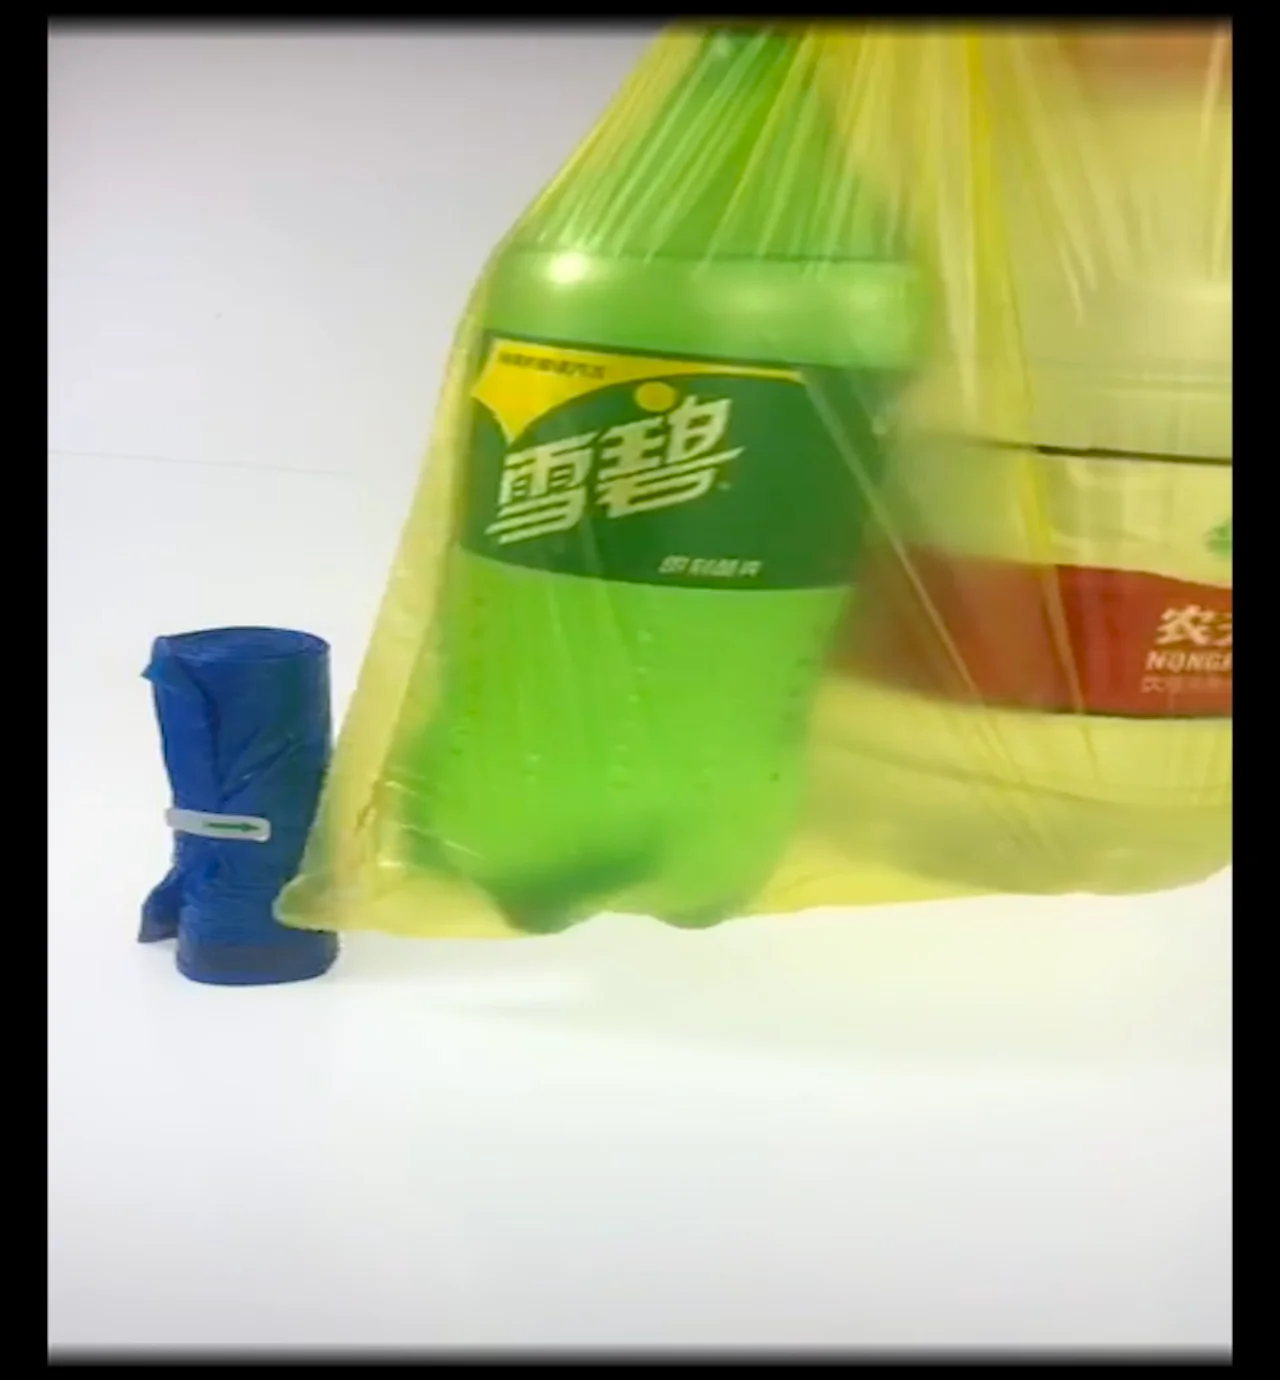 smart trash bin tie the plastic bag